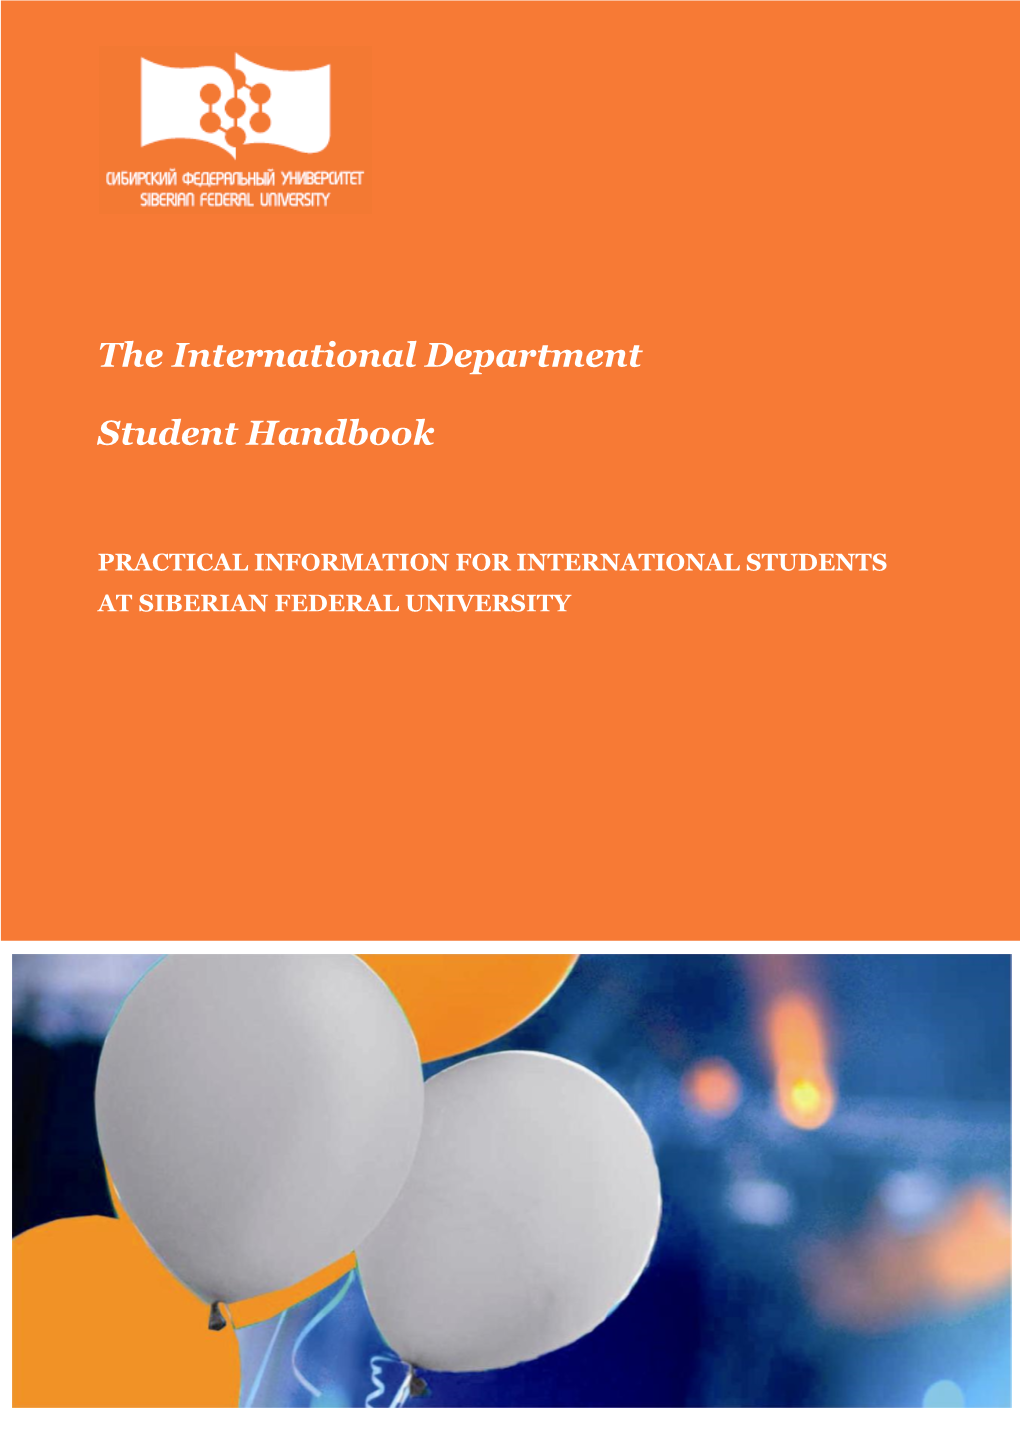 The International Department Student Handbook